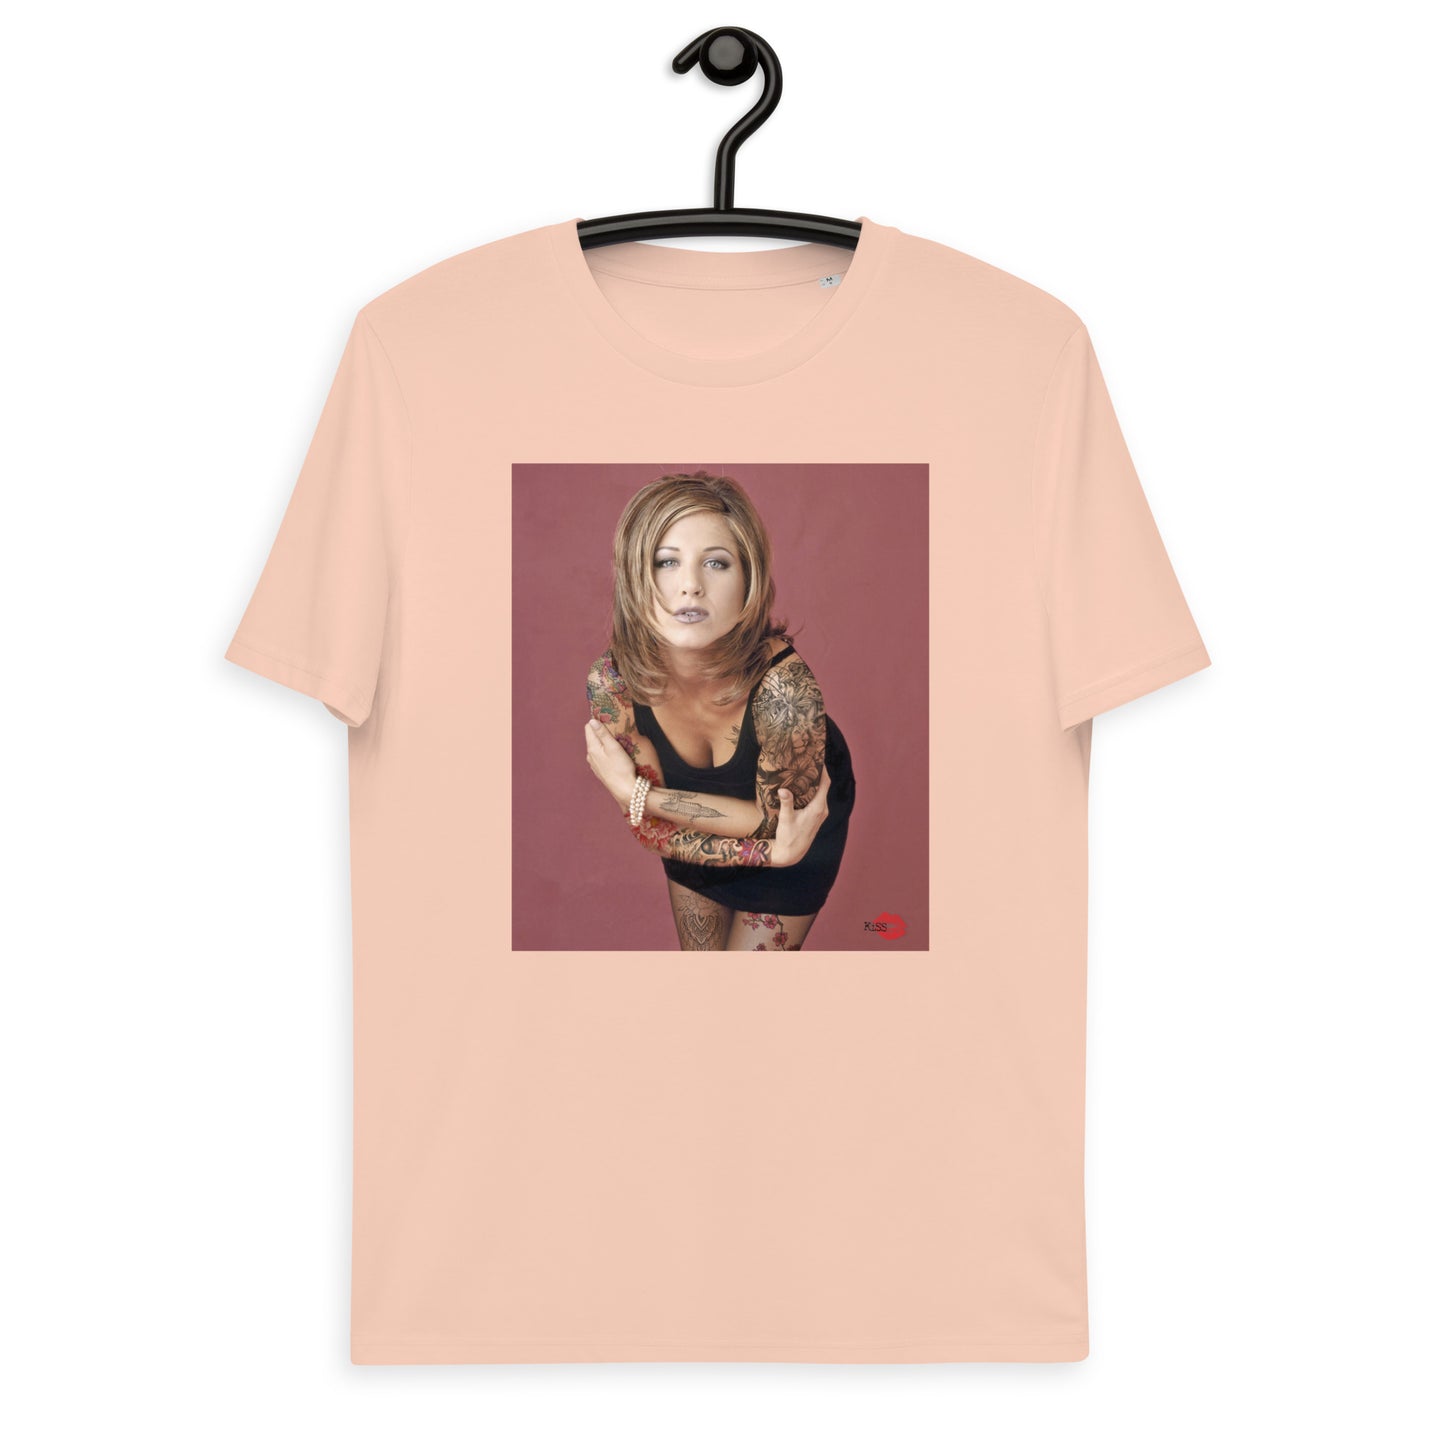 Inked Rachel Green KiSS Unisex organic cotton t-shirt - 90s Friends Alternative Jennifer Aniston